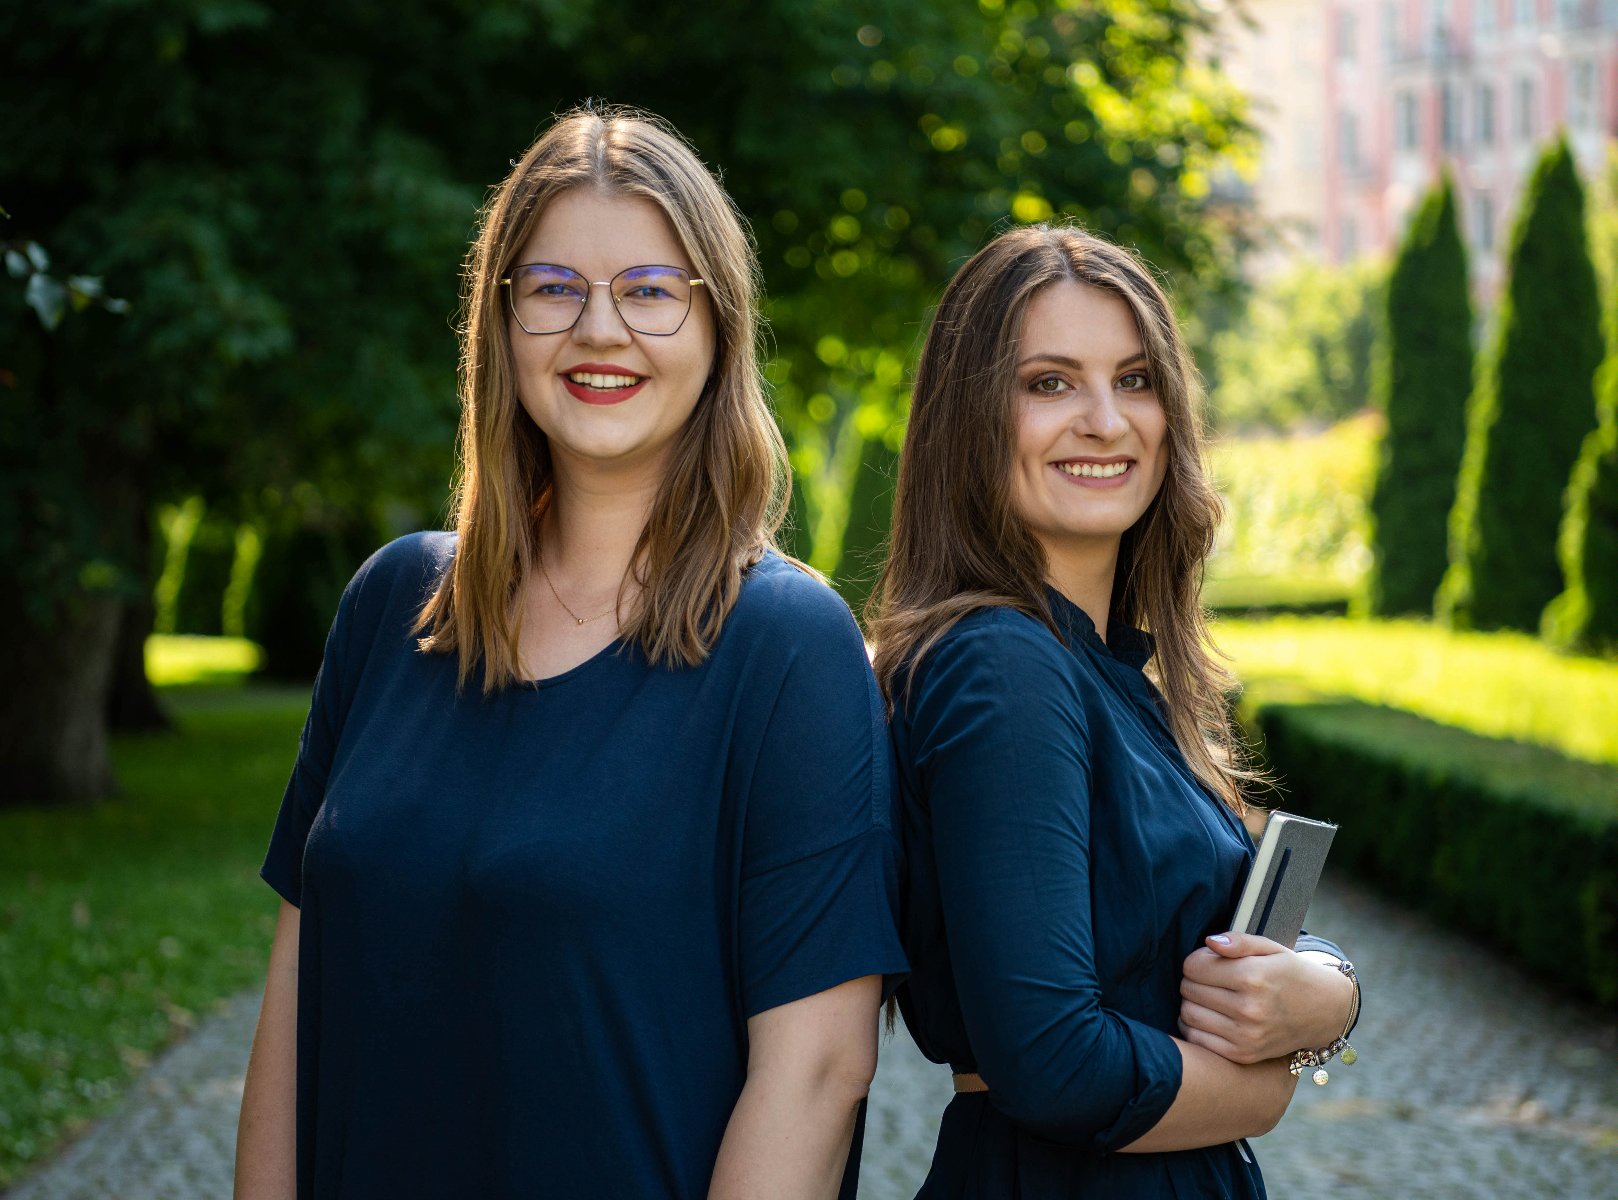 Joanna Chilińska and Diana Stashevska responsible for marketing